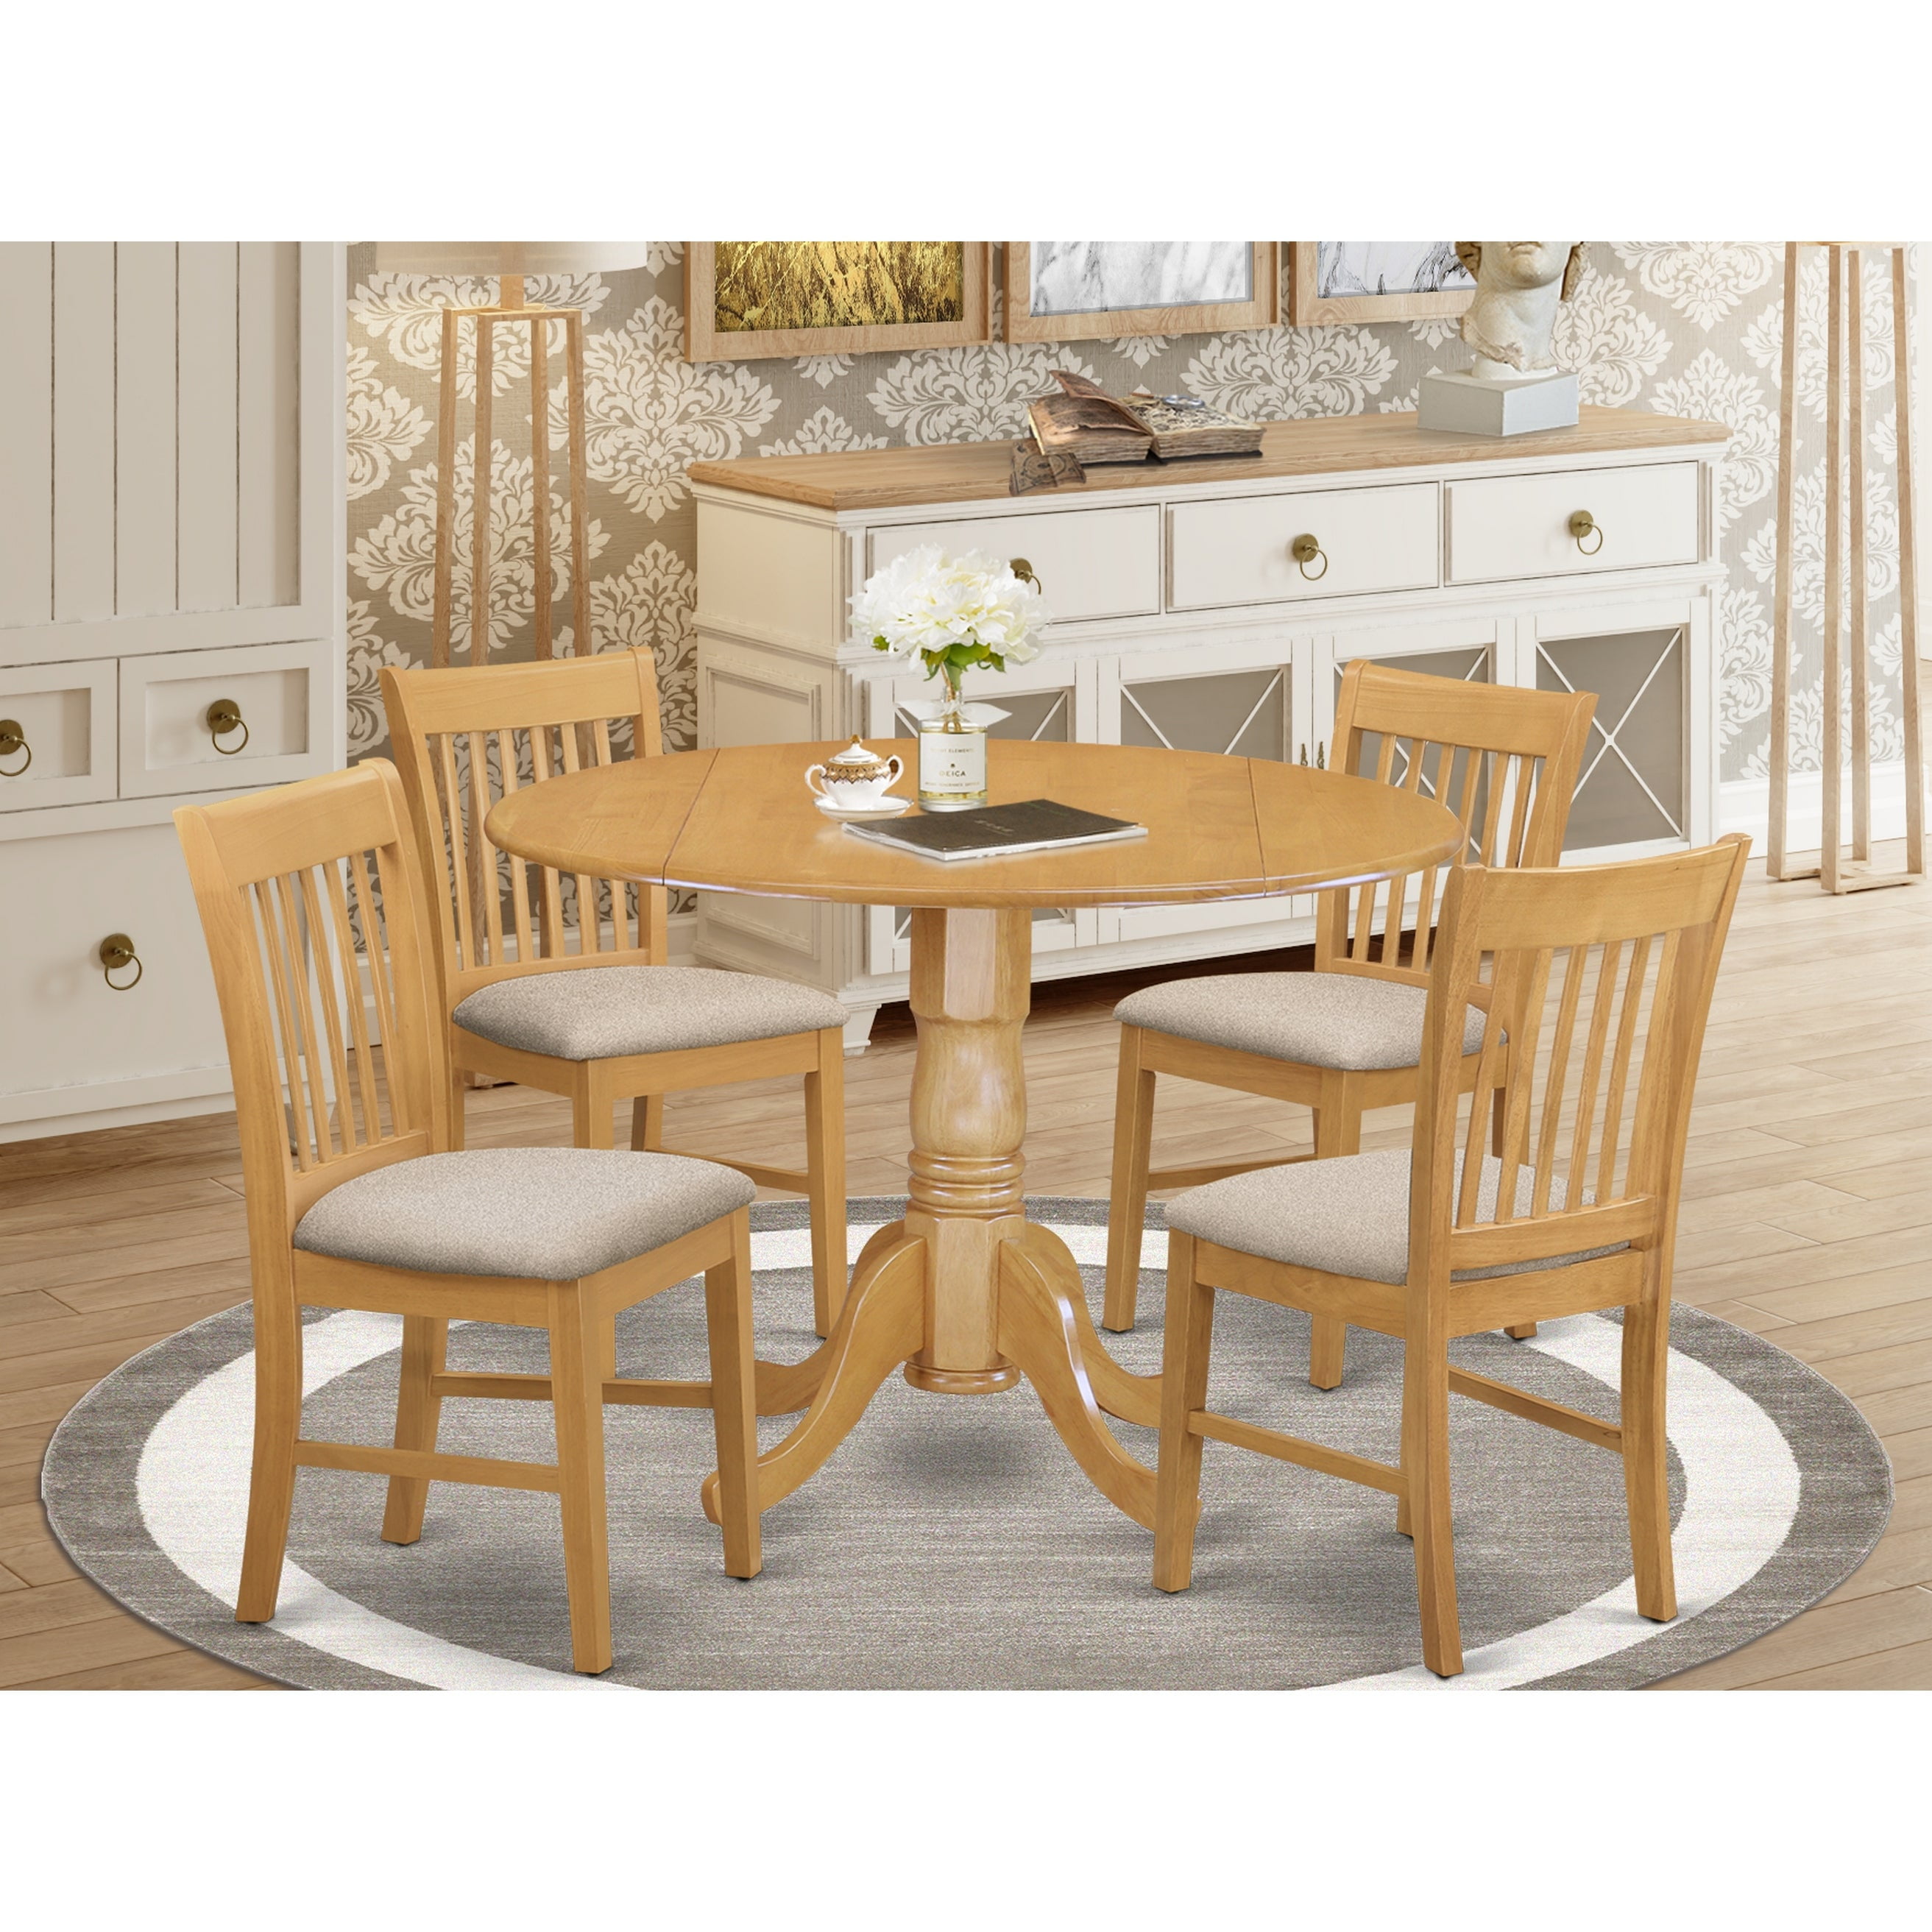  kitchen round table sets